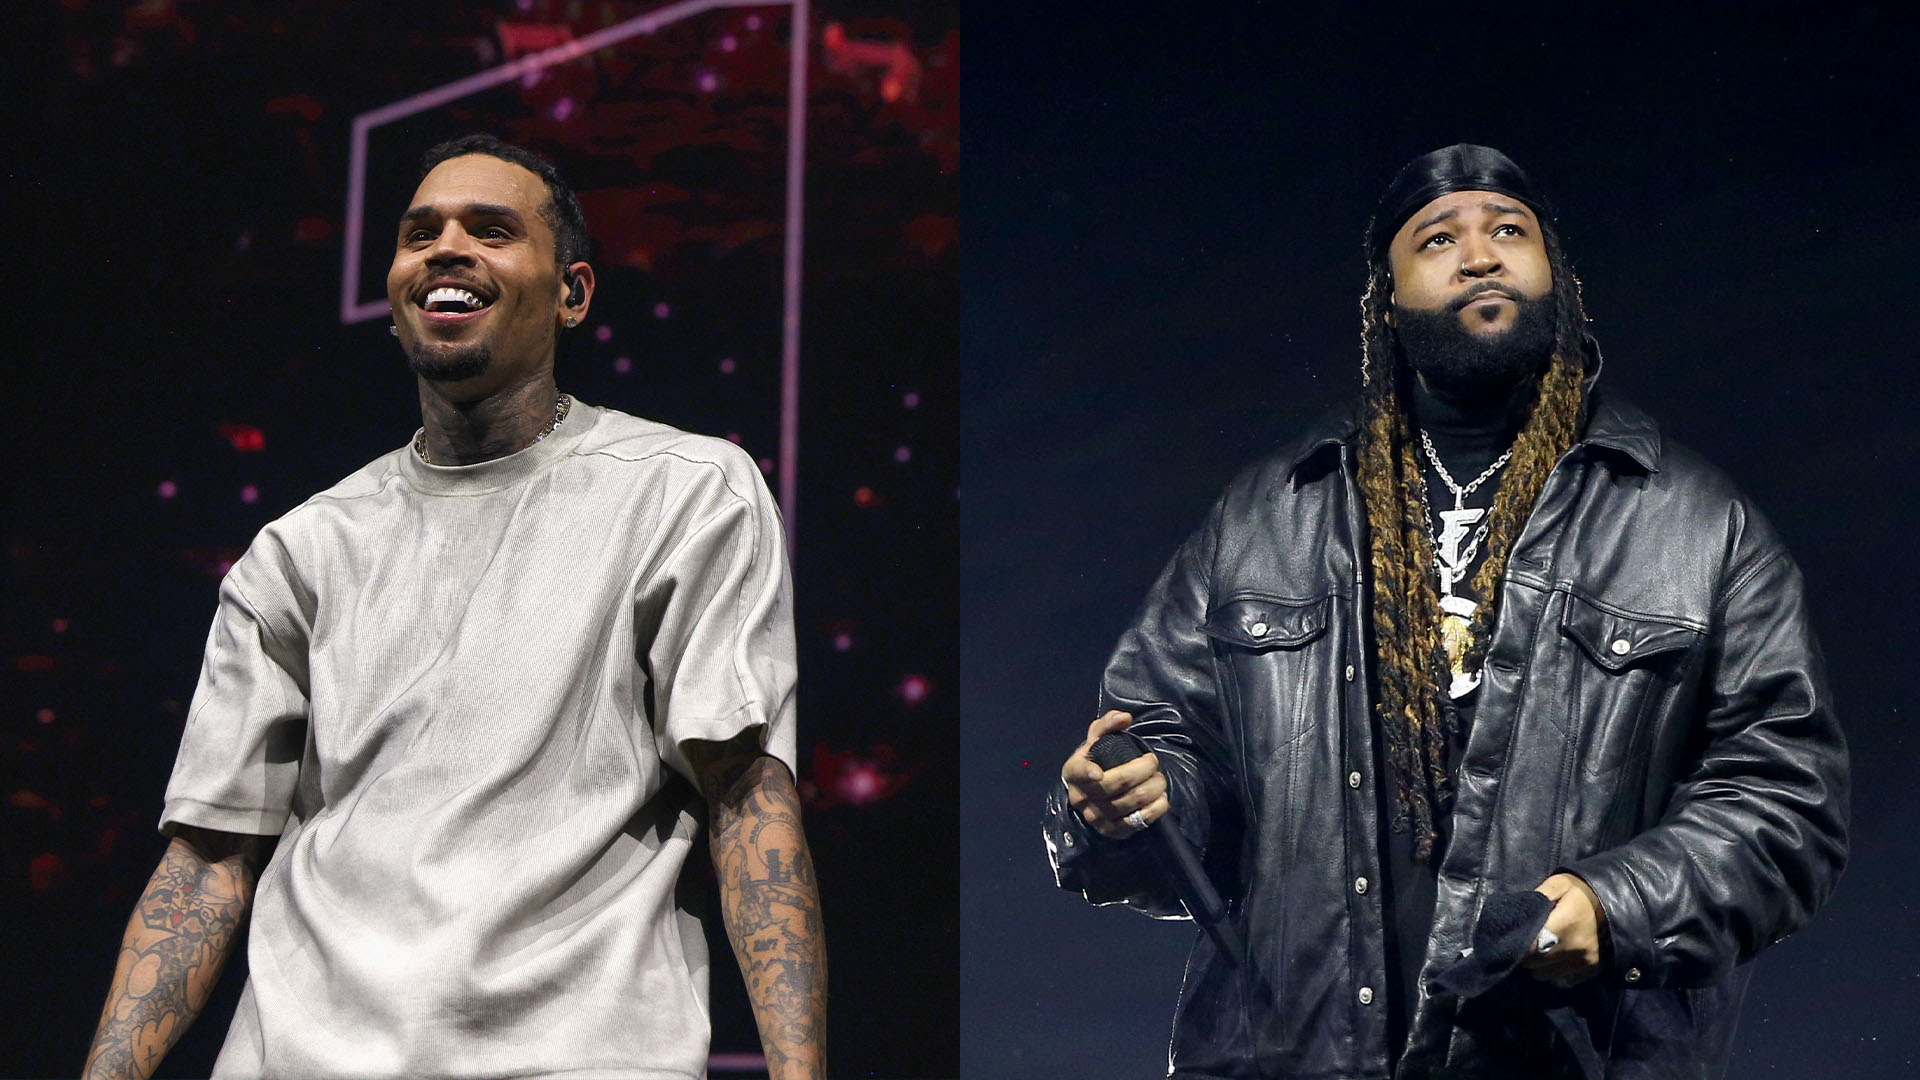 Chris Brown responds to his ex-girlfriend’s complaint by PARTYNEXTDOOR